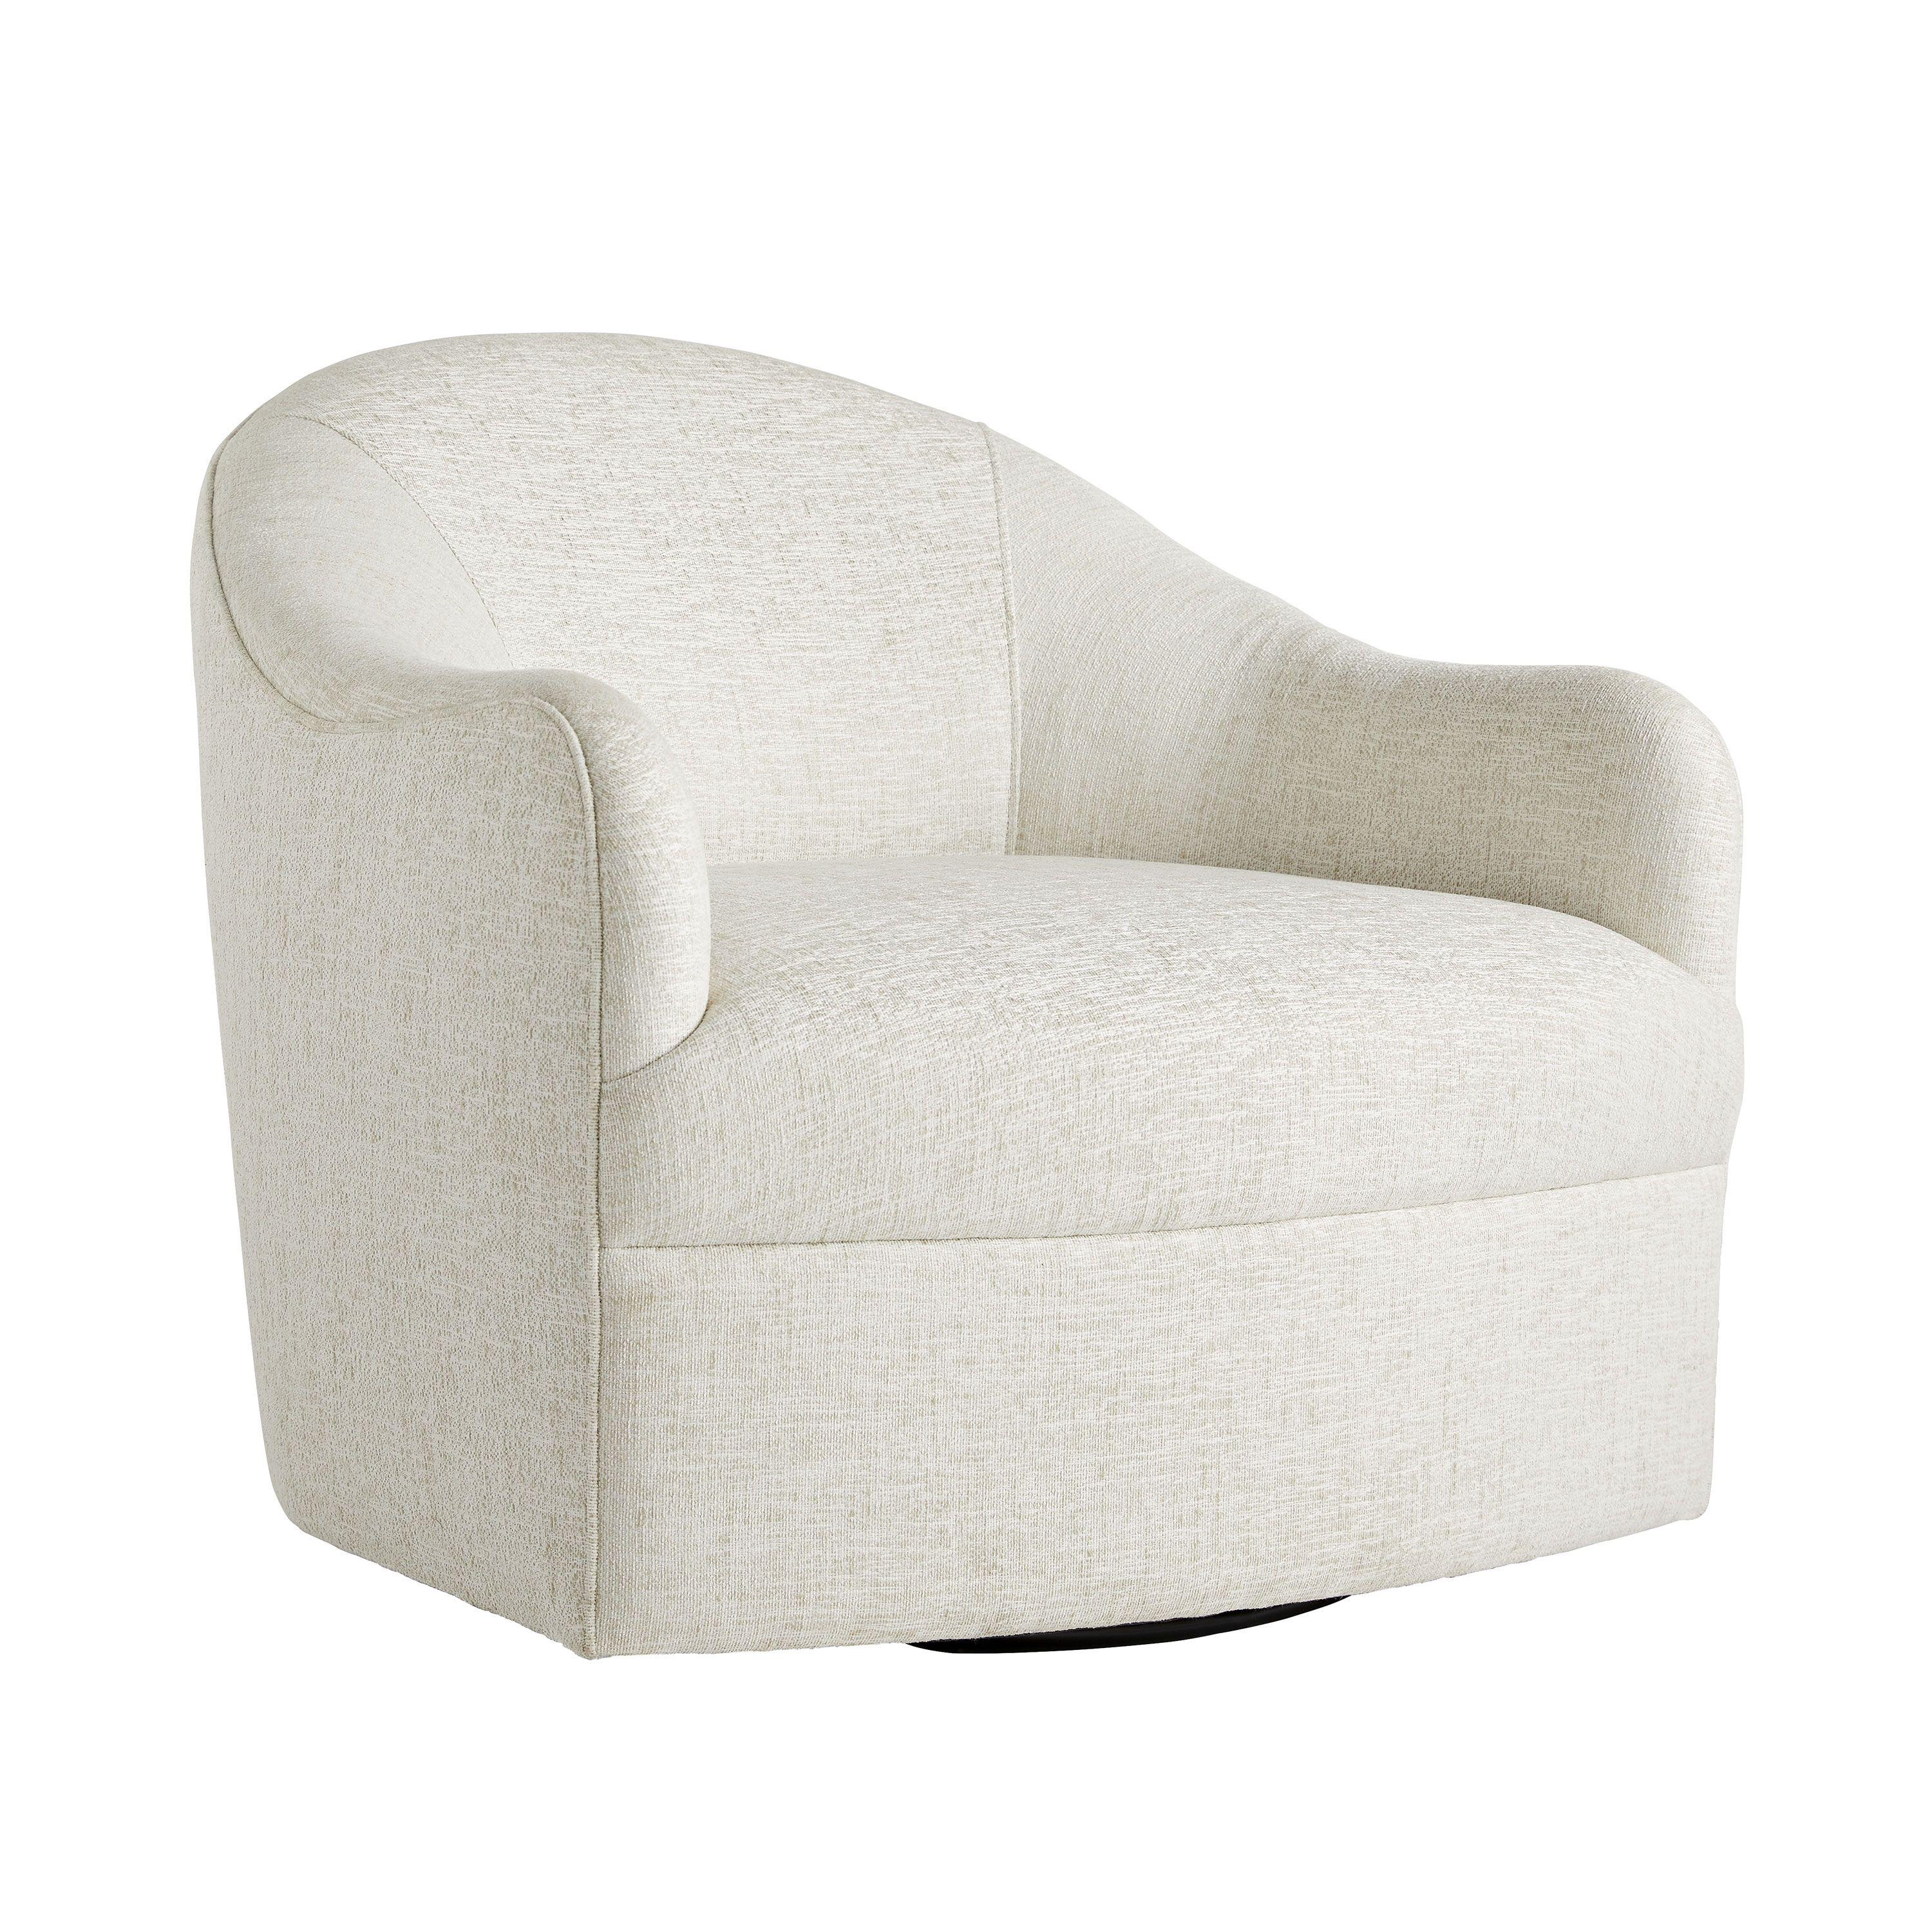 Купить Кресло Delfino Chair Frost Linen Swivel в интернет-магазине roooms.ru